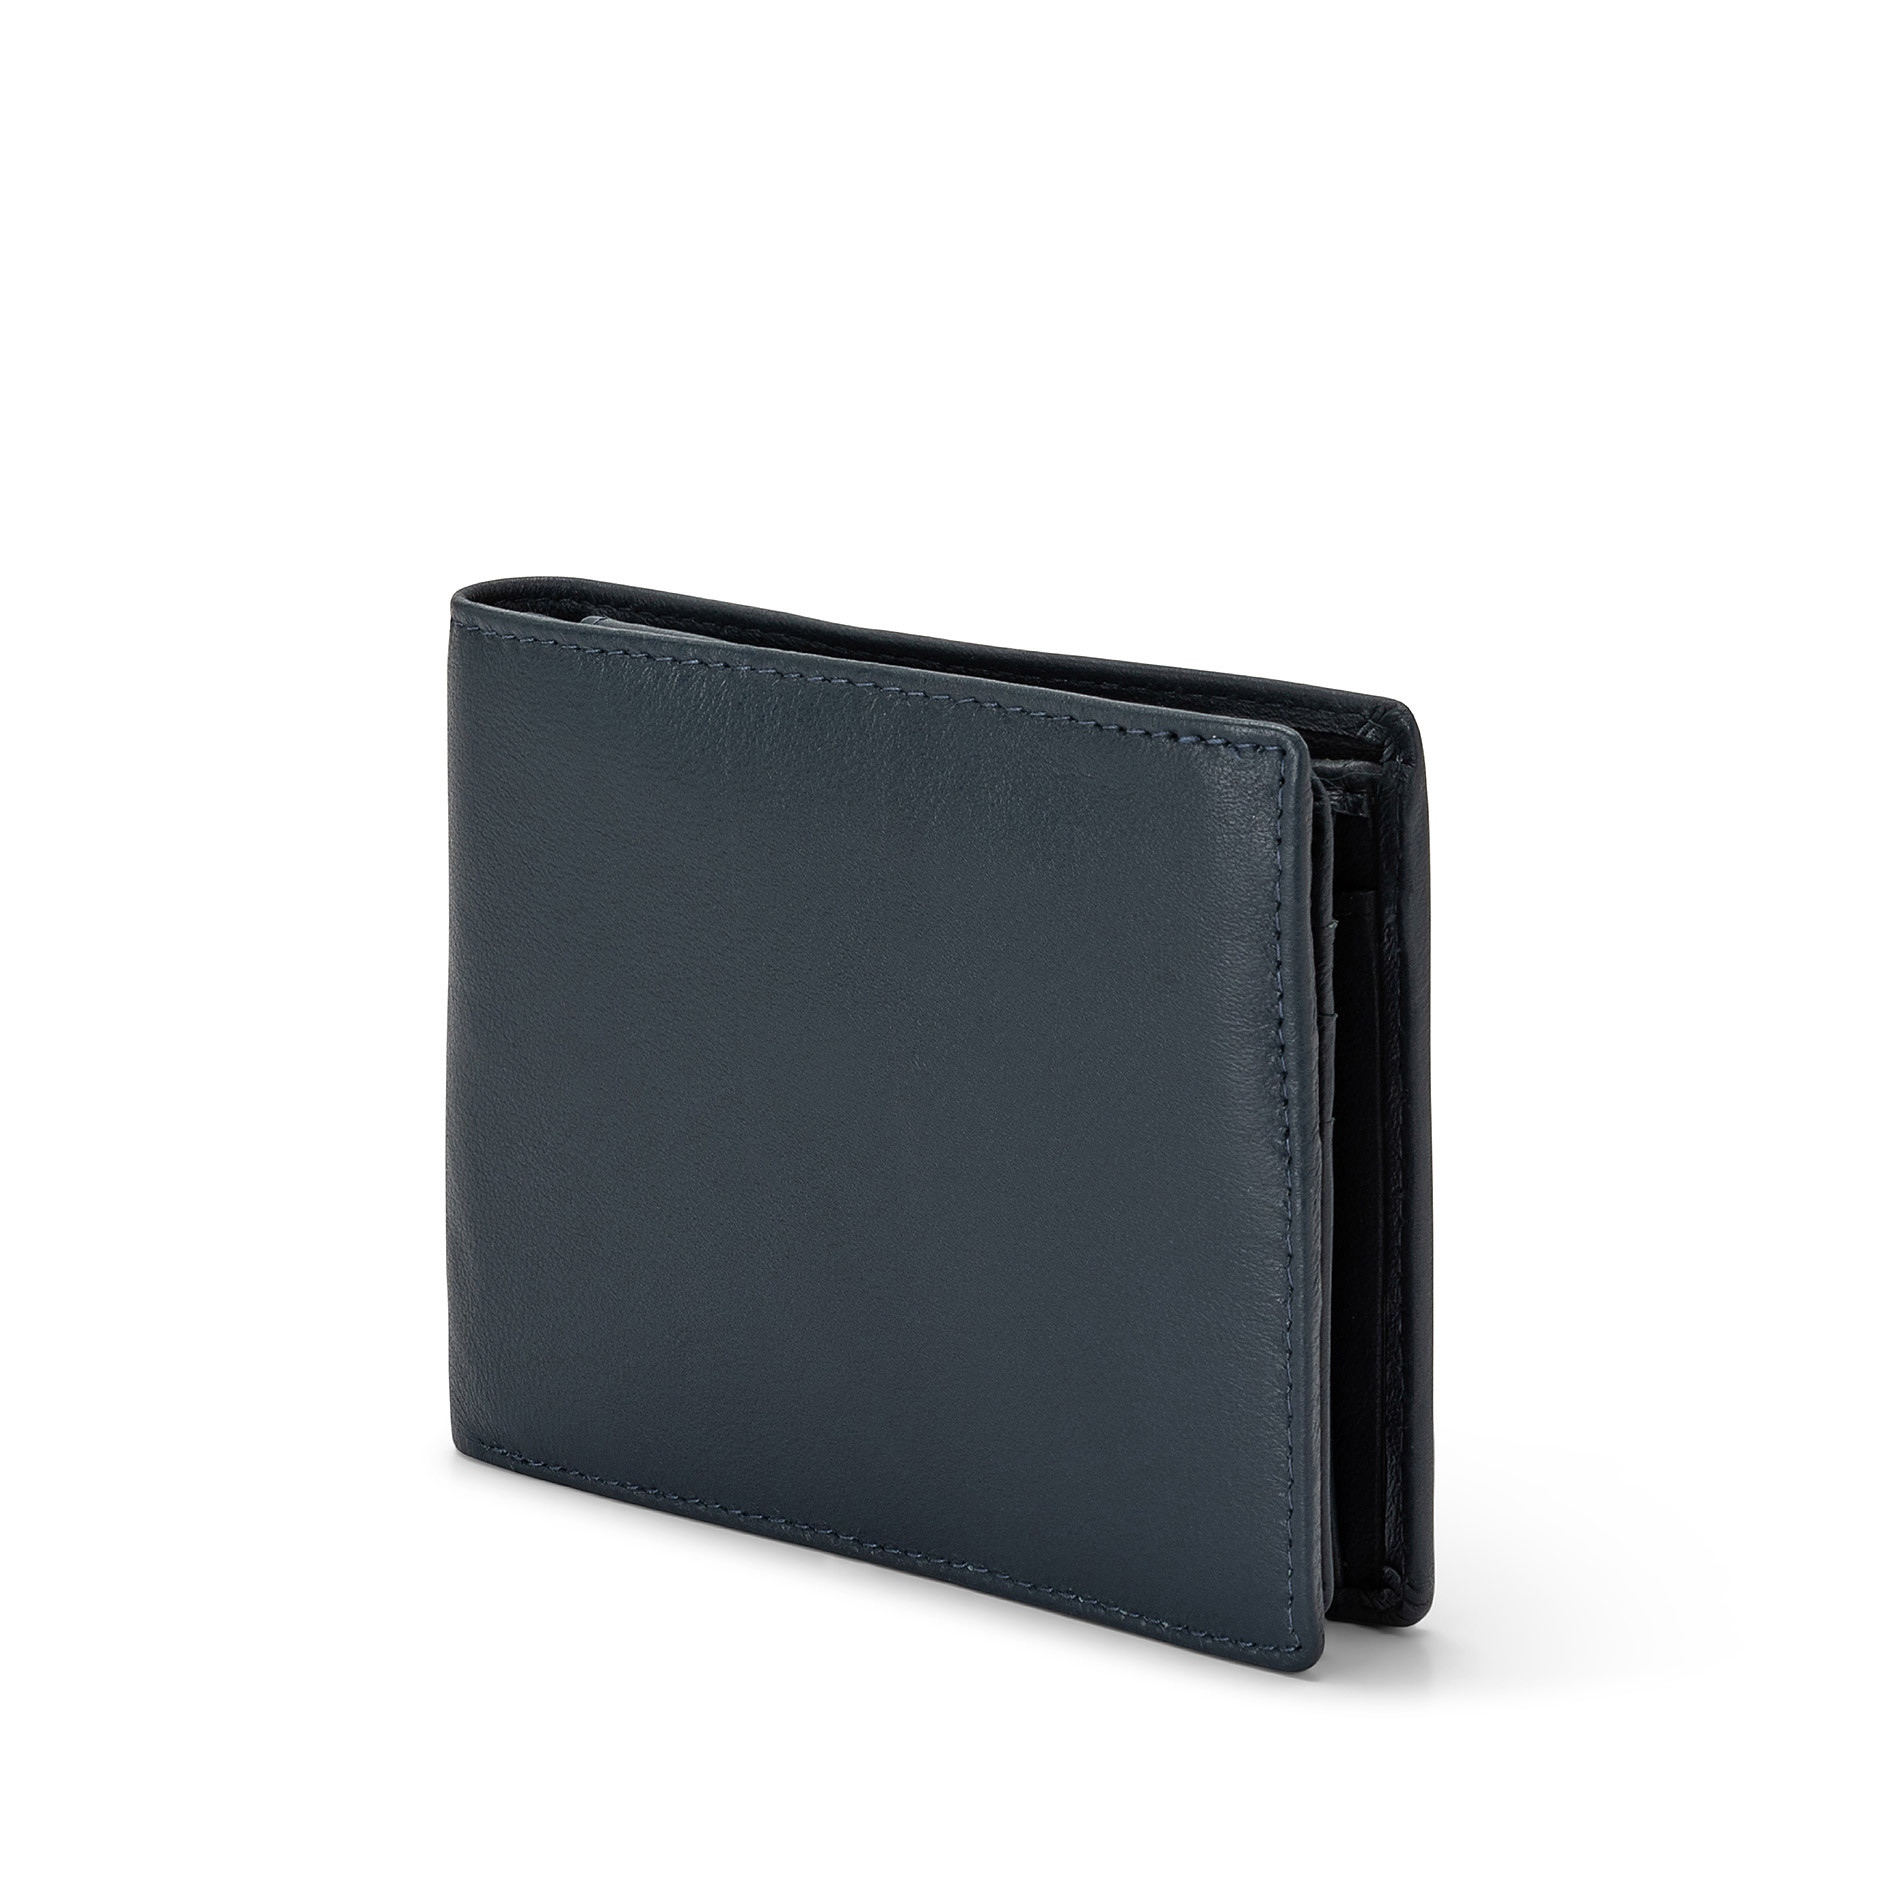 Luca D'Altieri leather wallet, Dark Blue, large image number 1